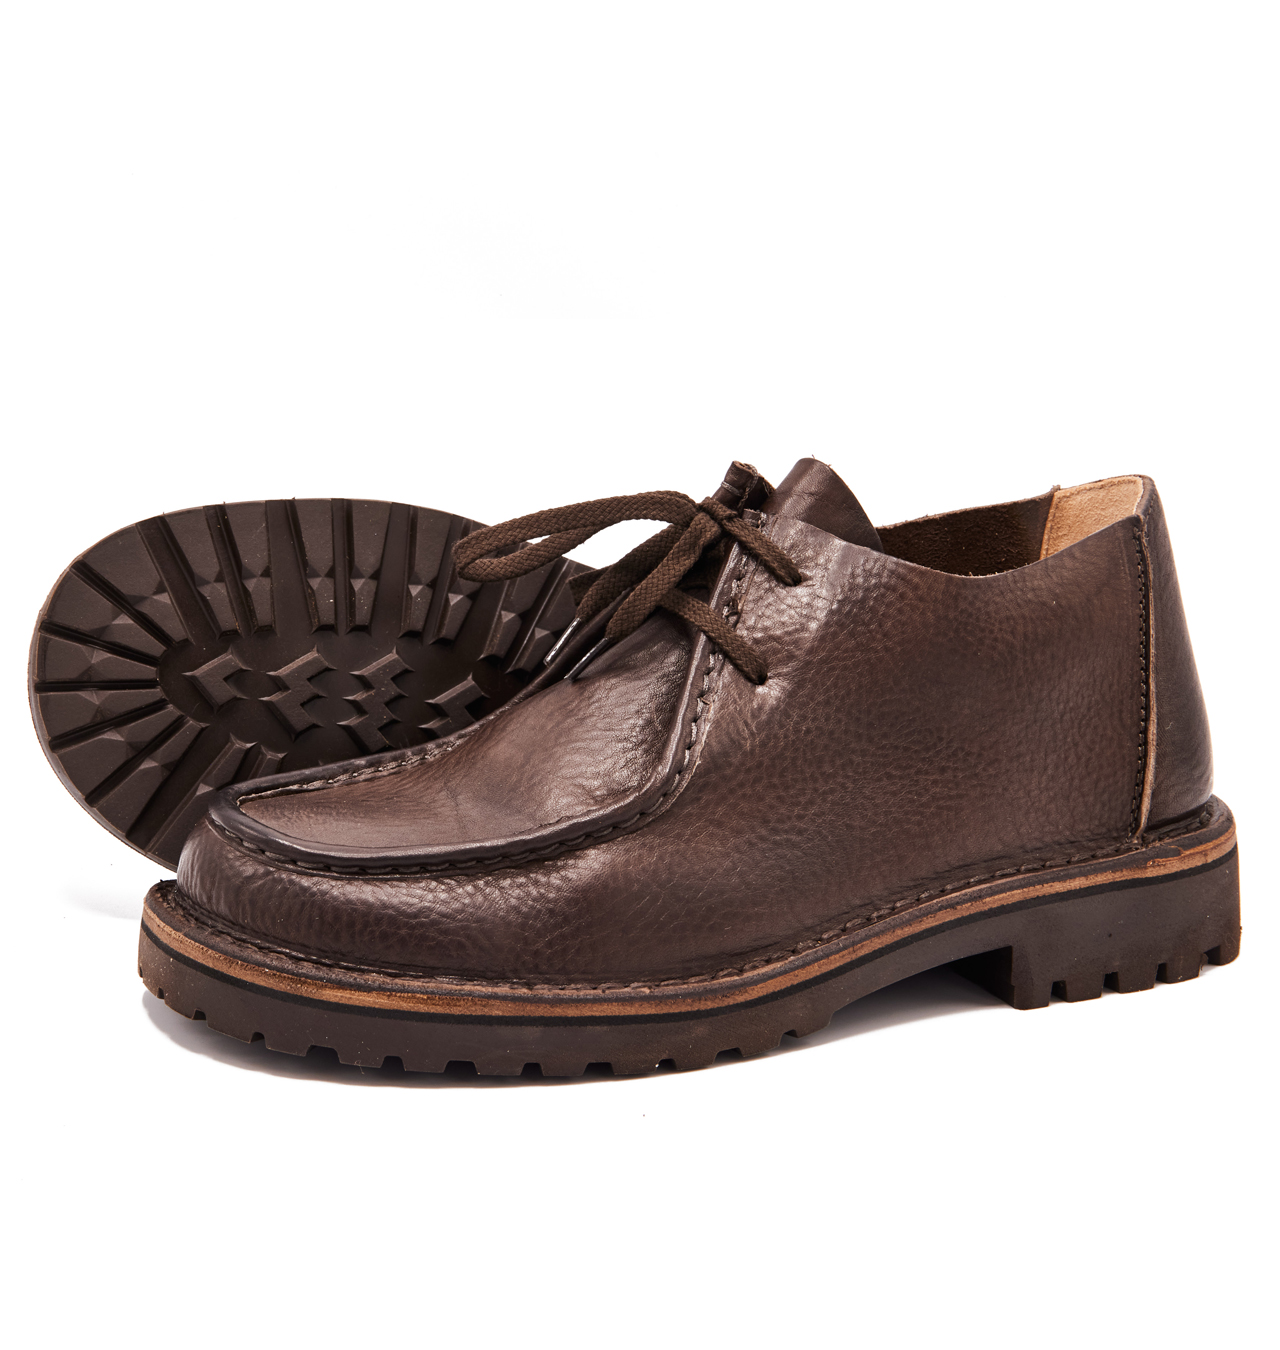 Astorflex - Beenflex Leather Moccasin Shoe - Coffee